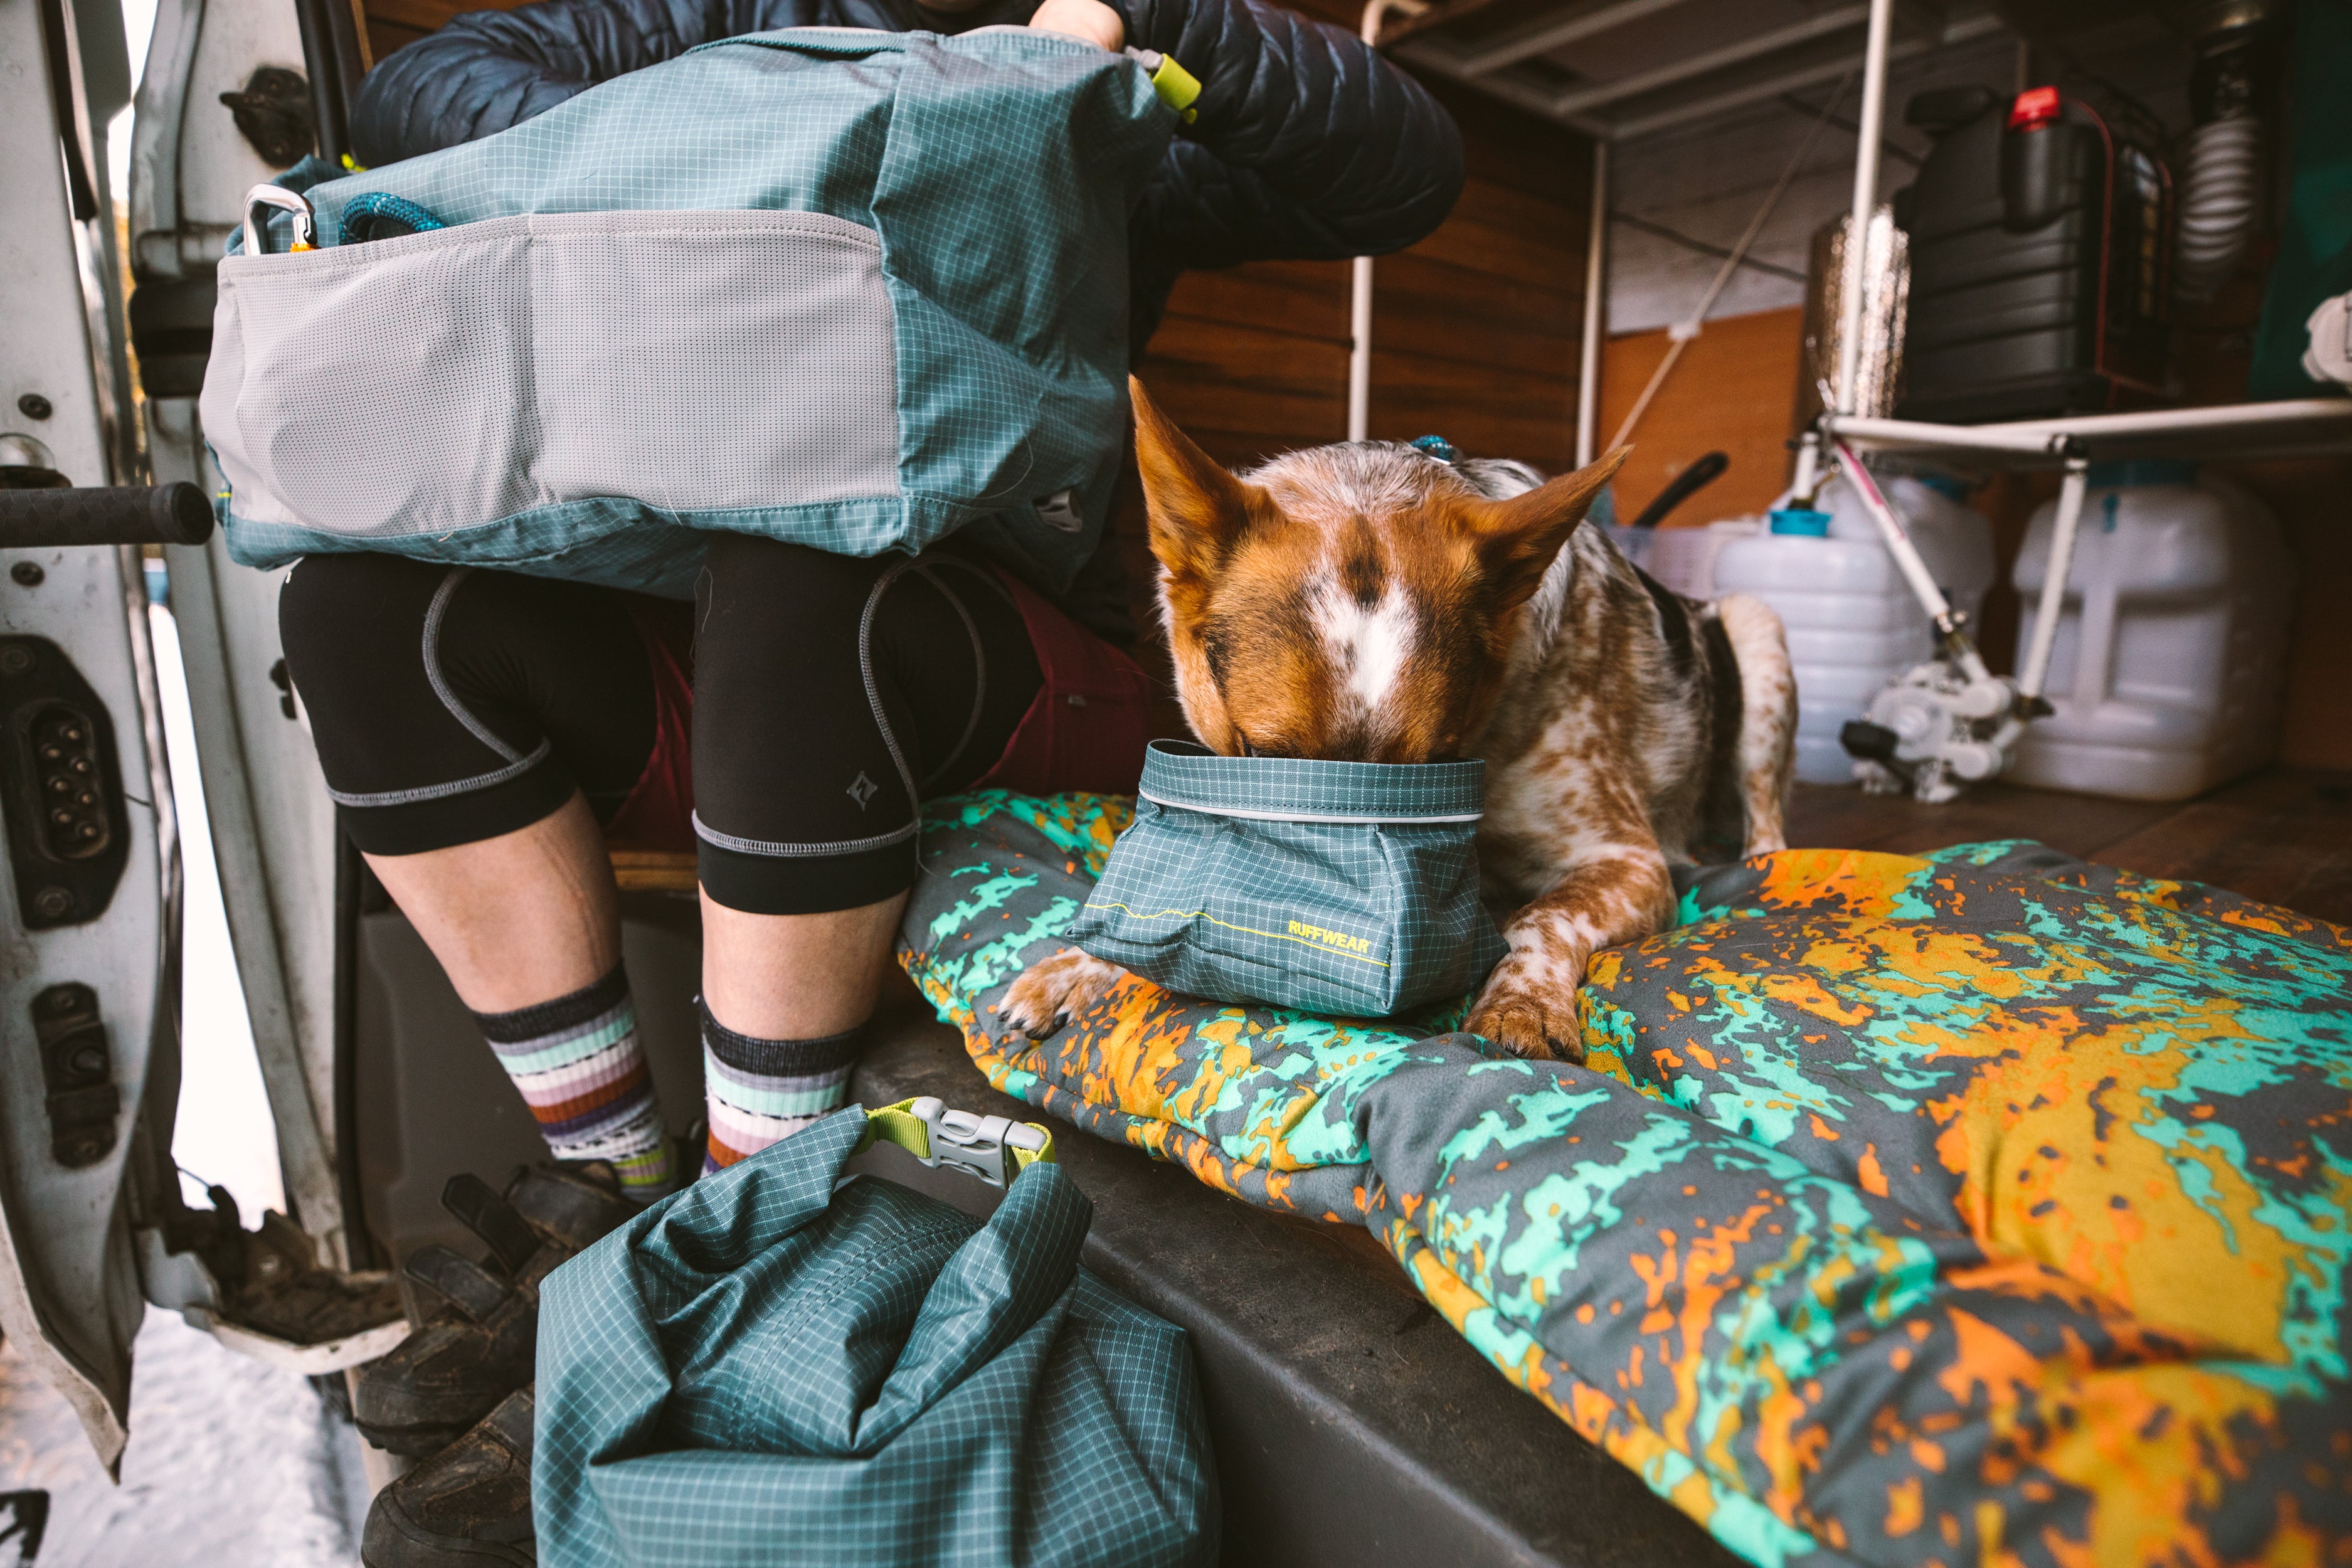 In a camper van, a dog eats from a Ruffwear Great Basin™ Dog Bowl.